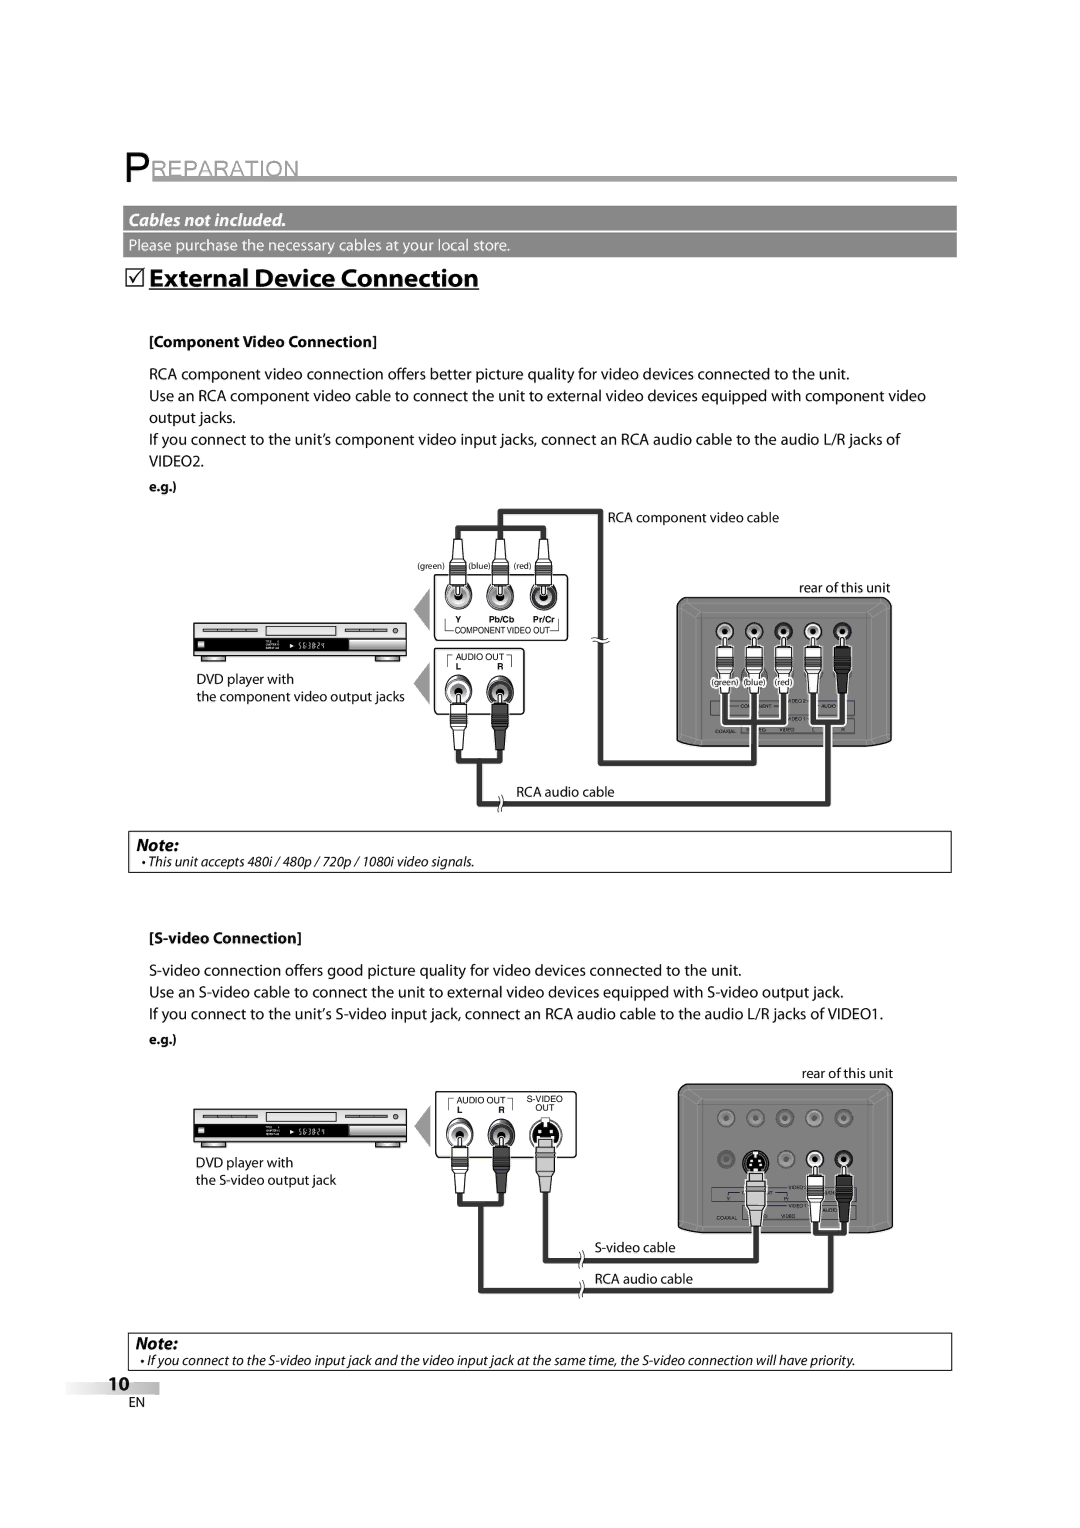 Emerson LD195EM8 2, LD195EM8 7 owner manual 5External Device Connection, Component Video Connection 